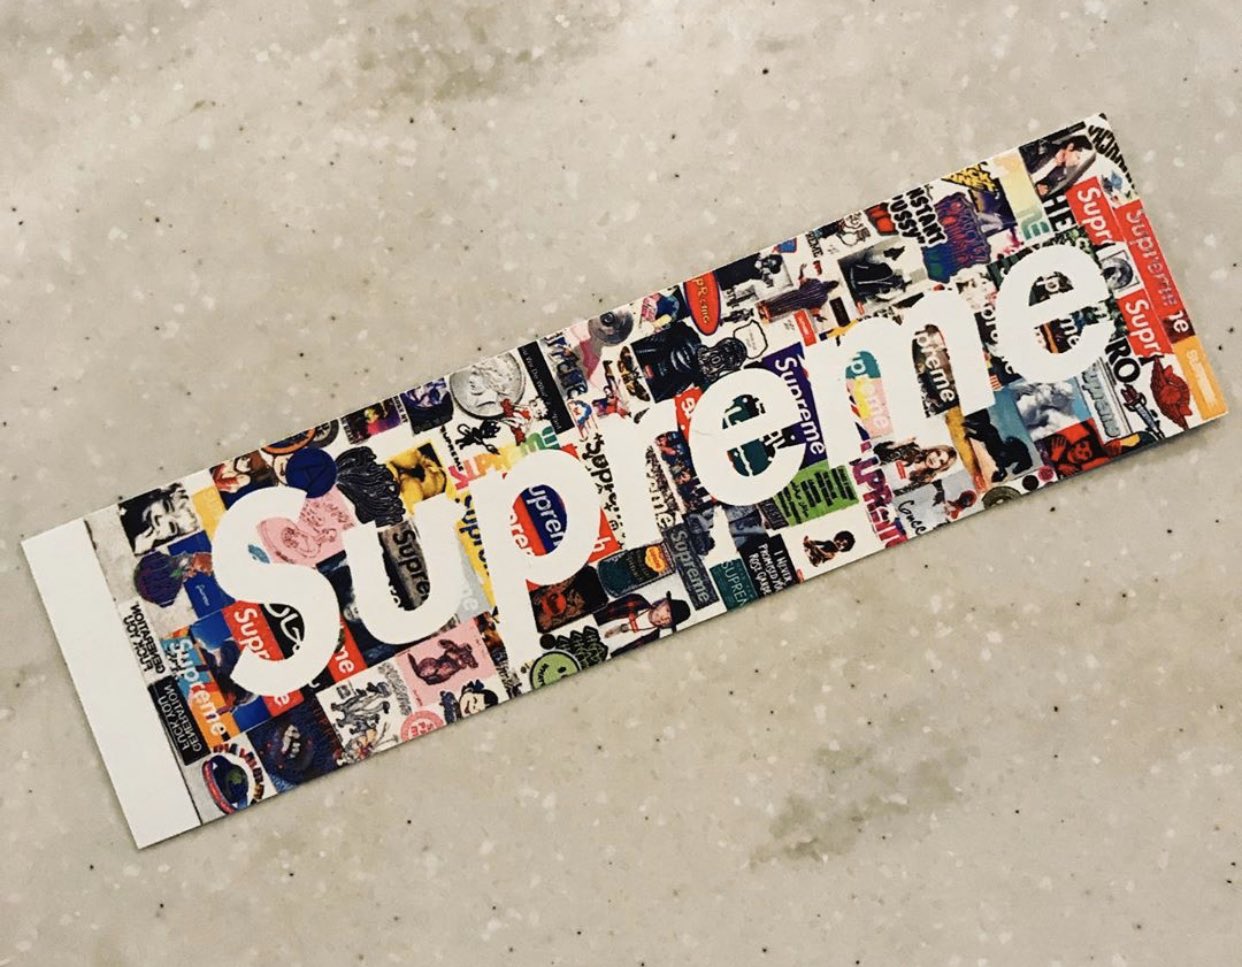 DropsByJay on X: Supreme “Volume 2” Box Logo Sticker and poster   / X